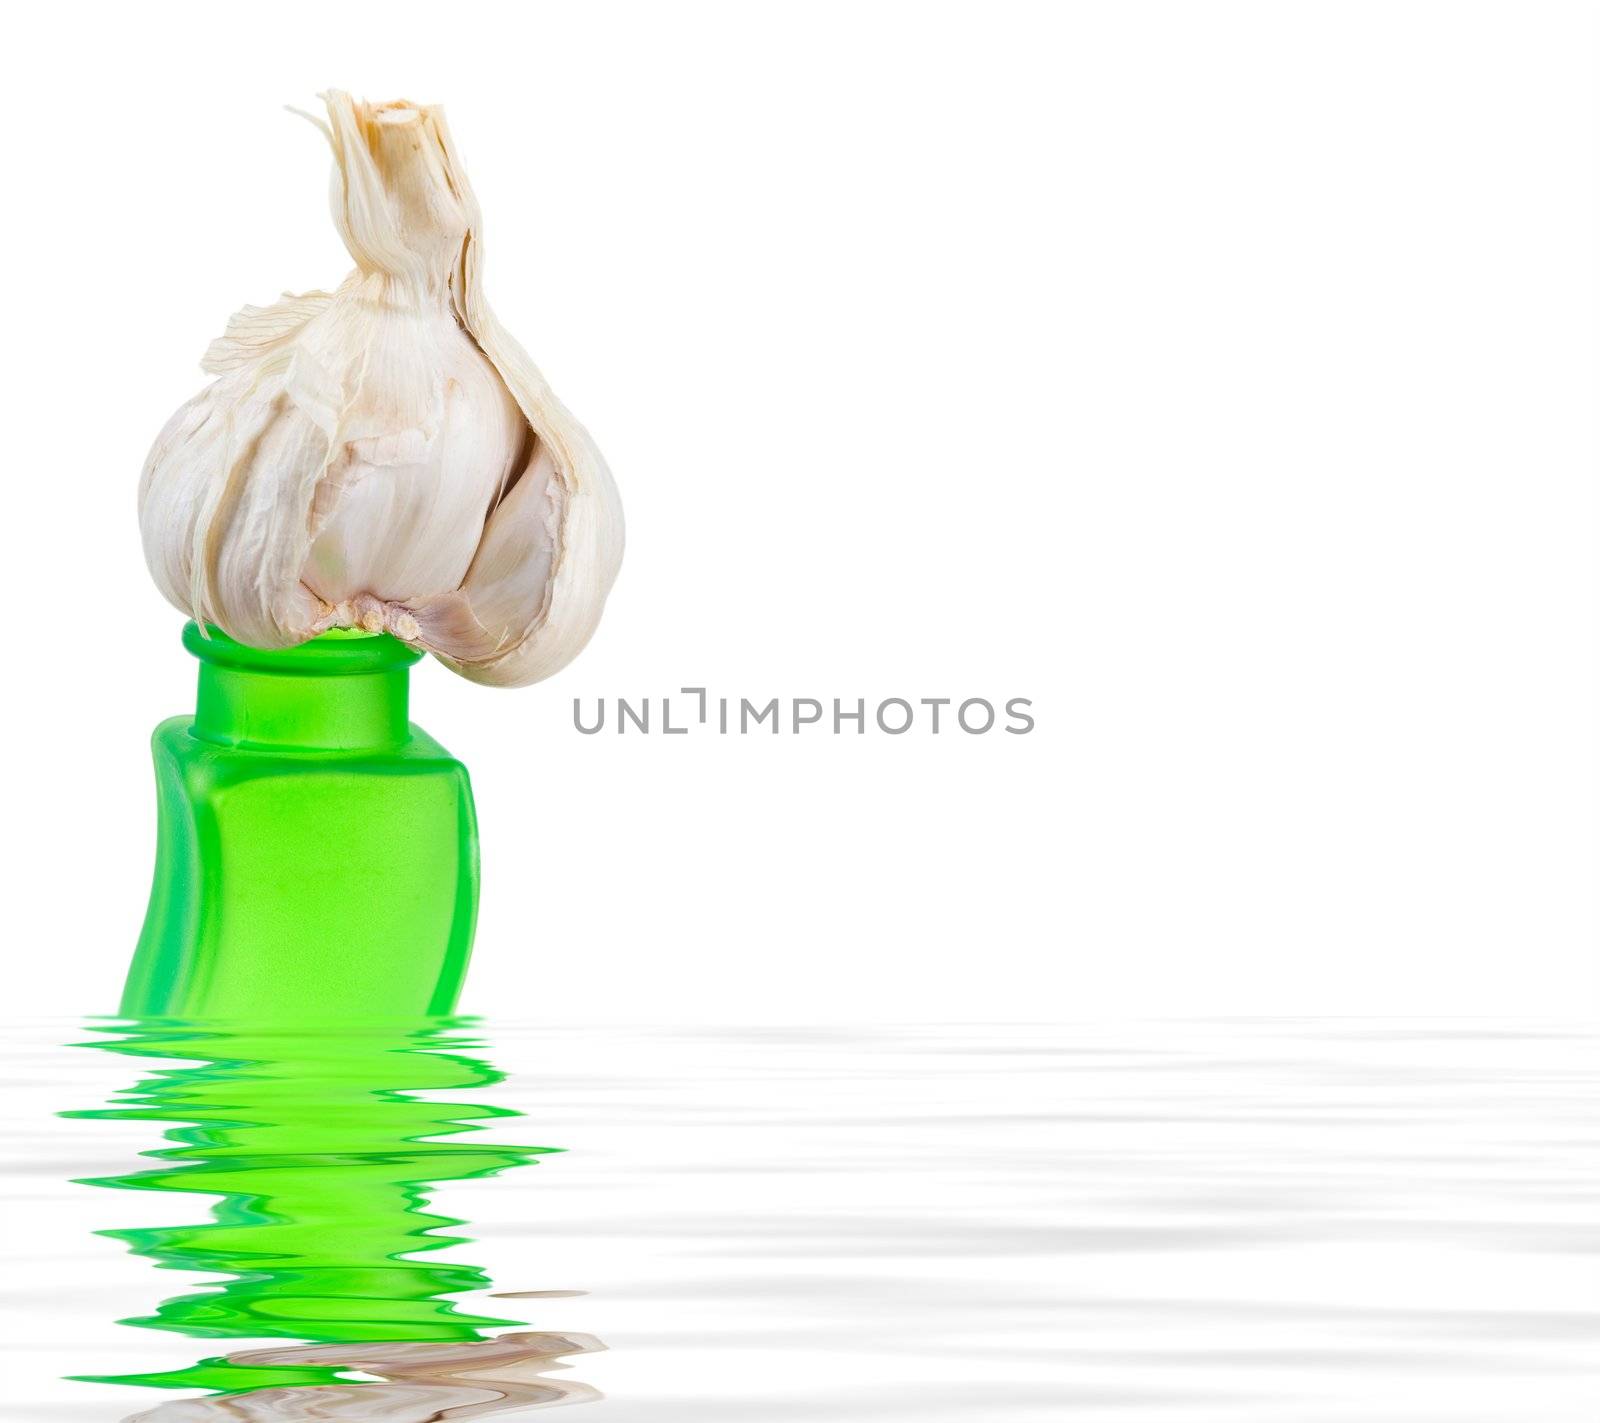 Closeup. Natural Garlic bulb on white background